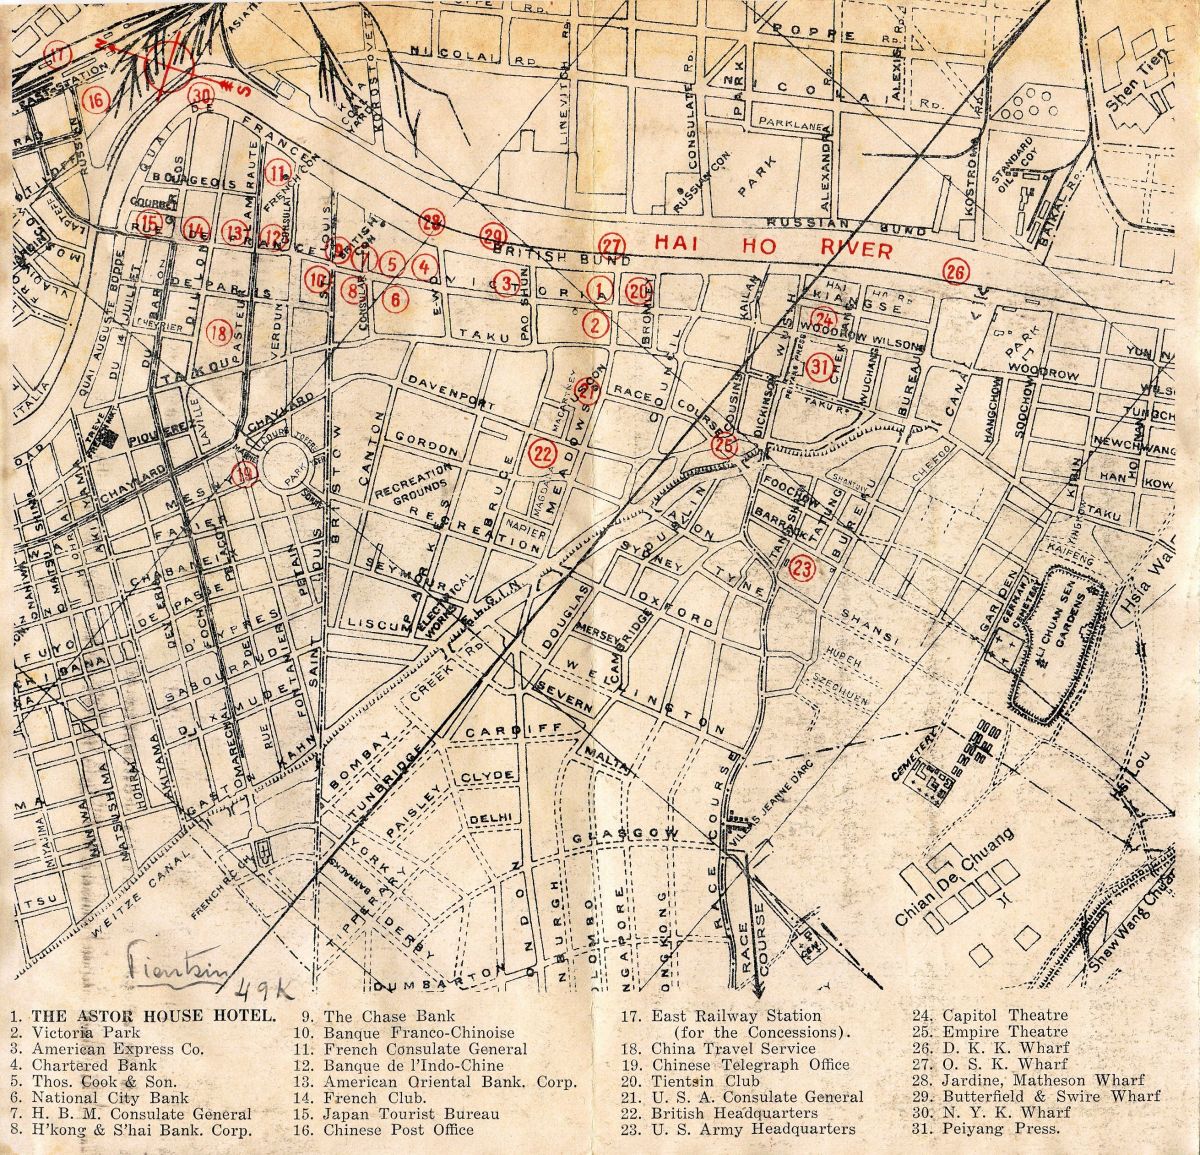 Astor Hotel Map of Tientsin, ca. 1930-1937, Fred M. Greguras Papers